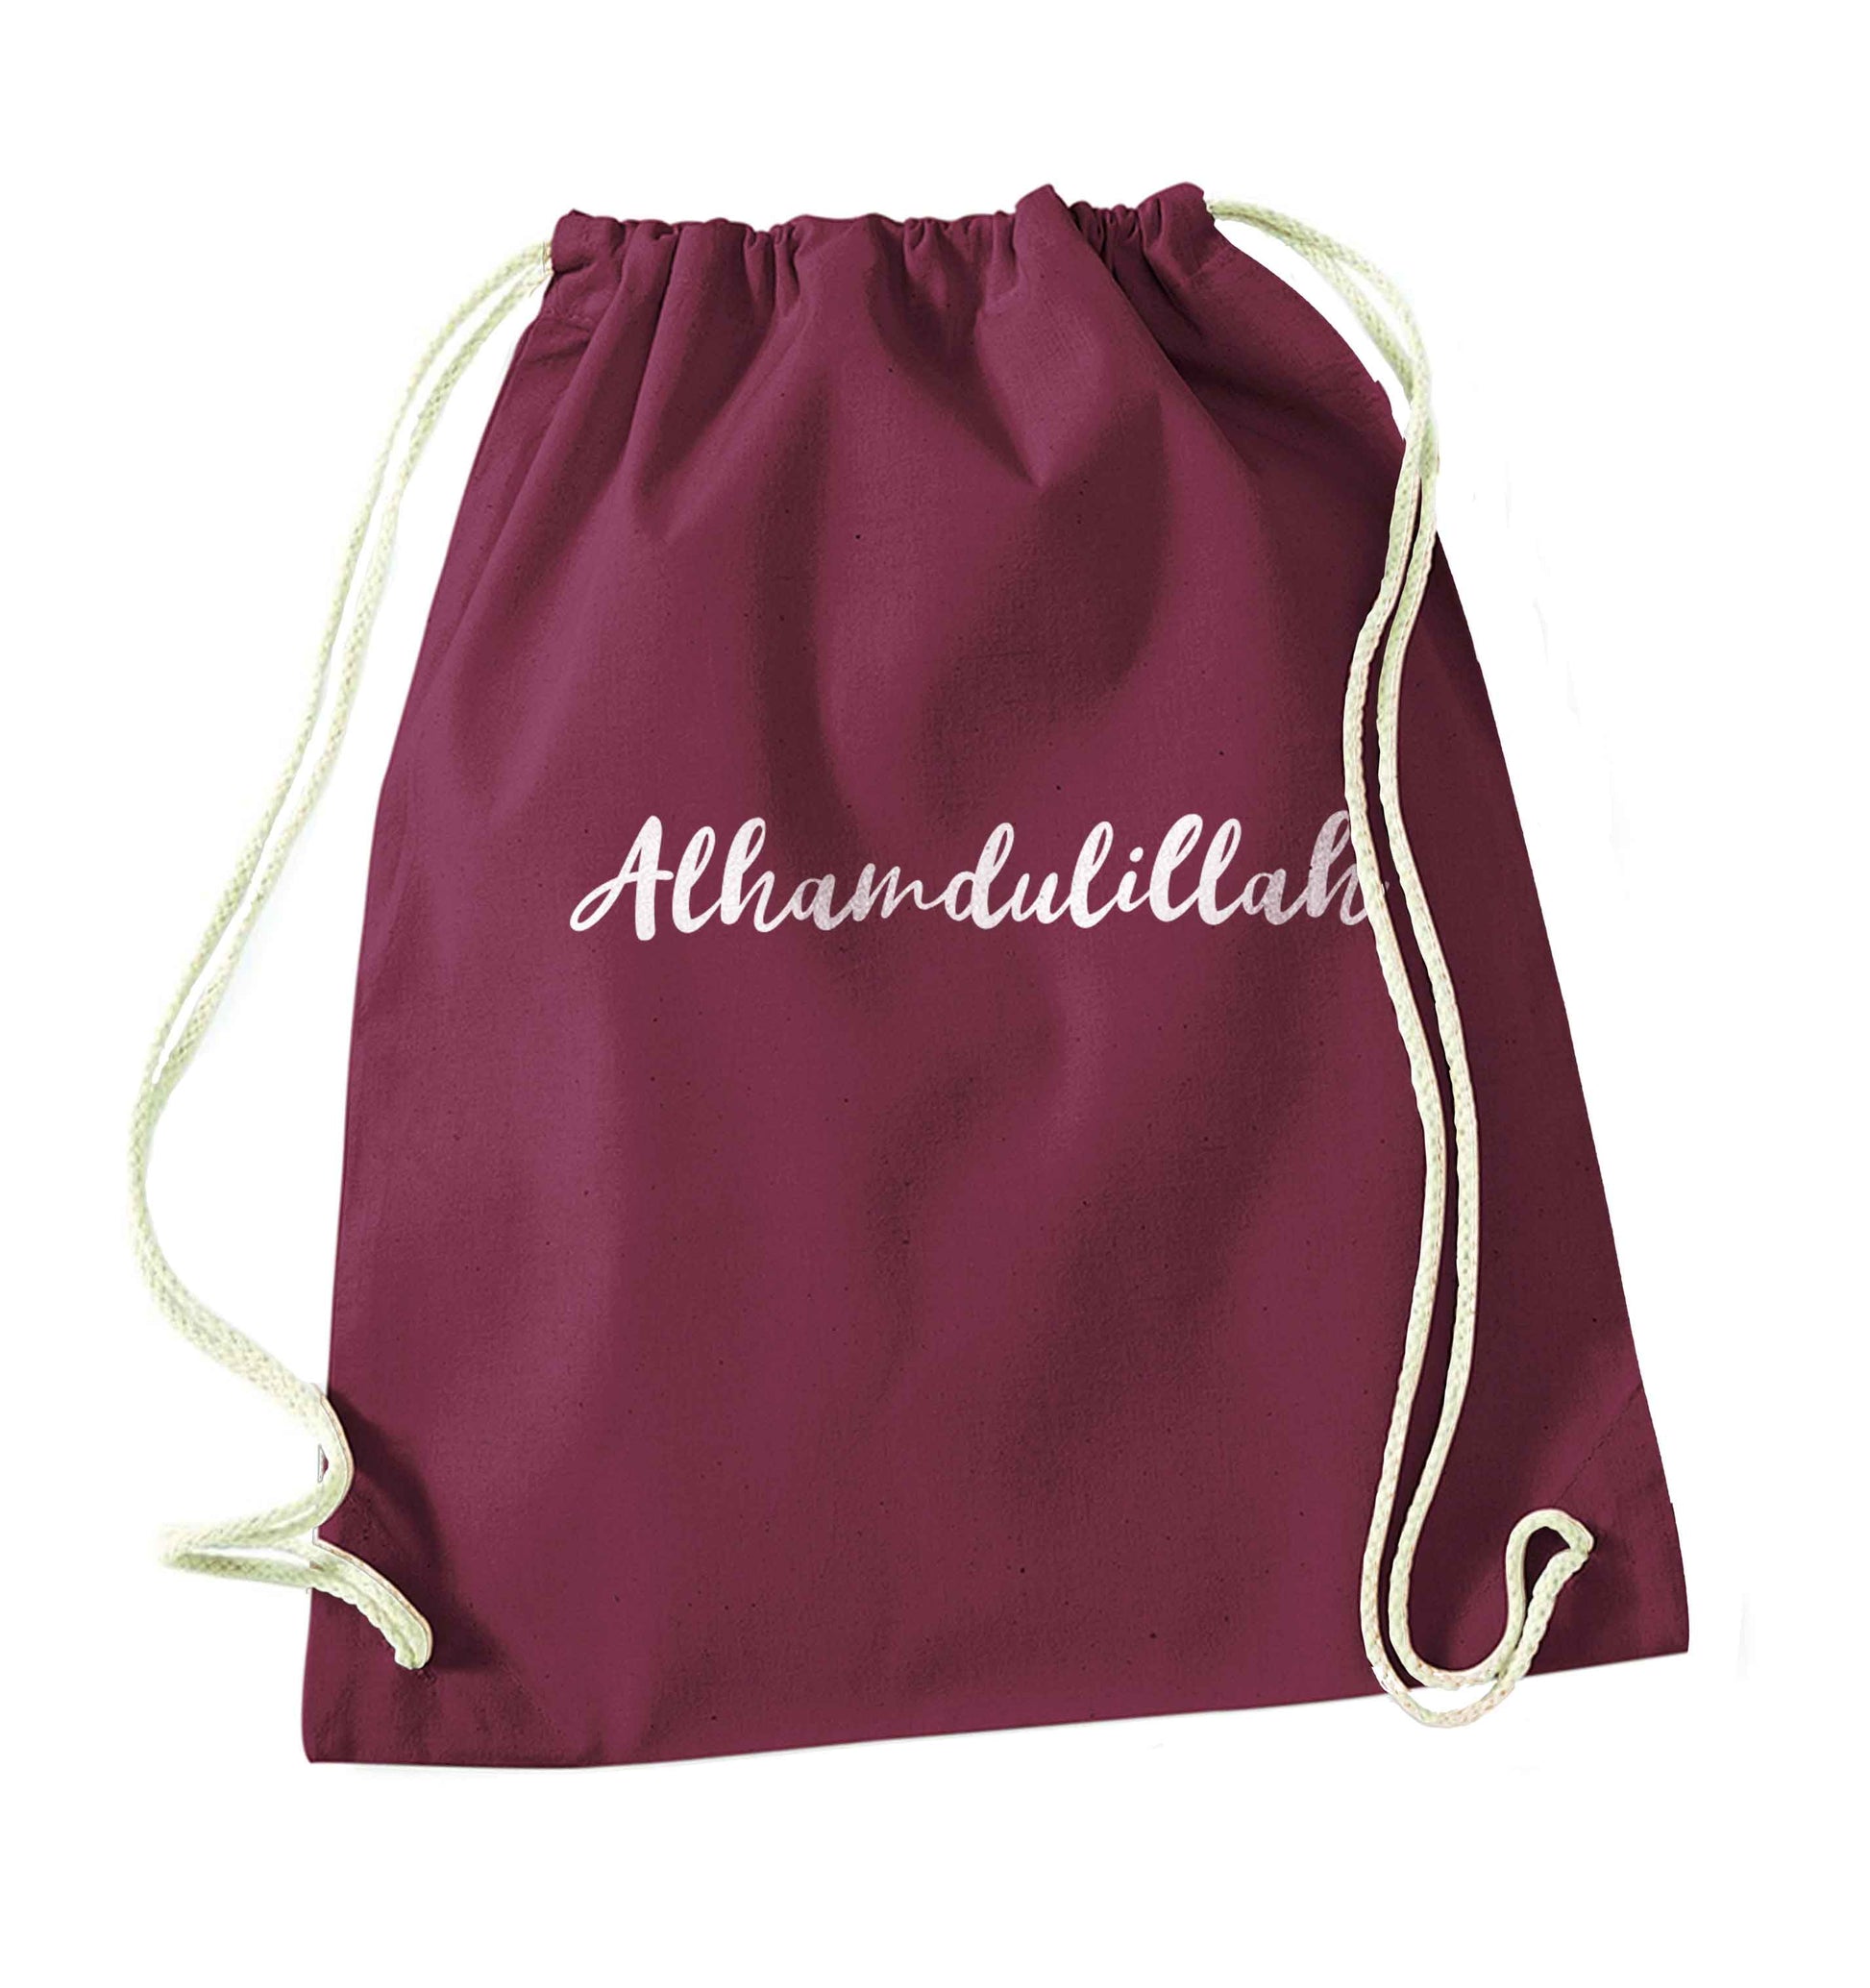 alhamdulillah maroon drawstring bag